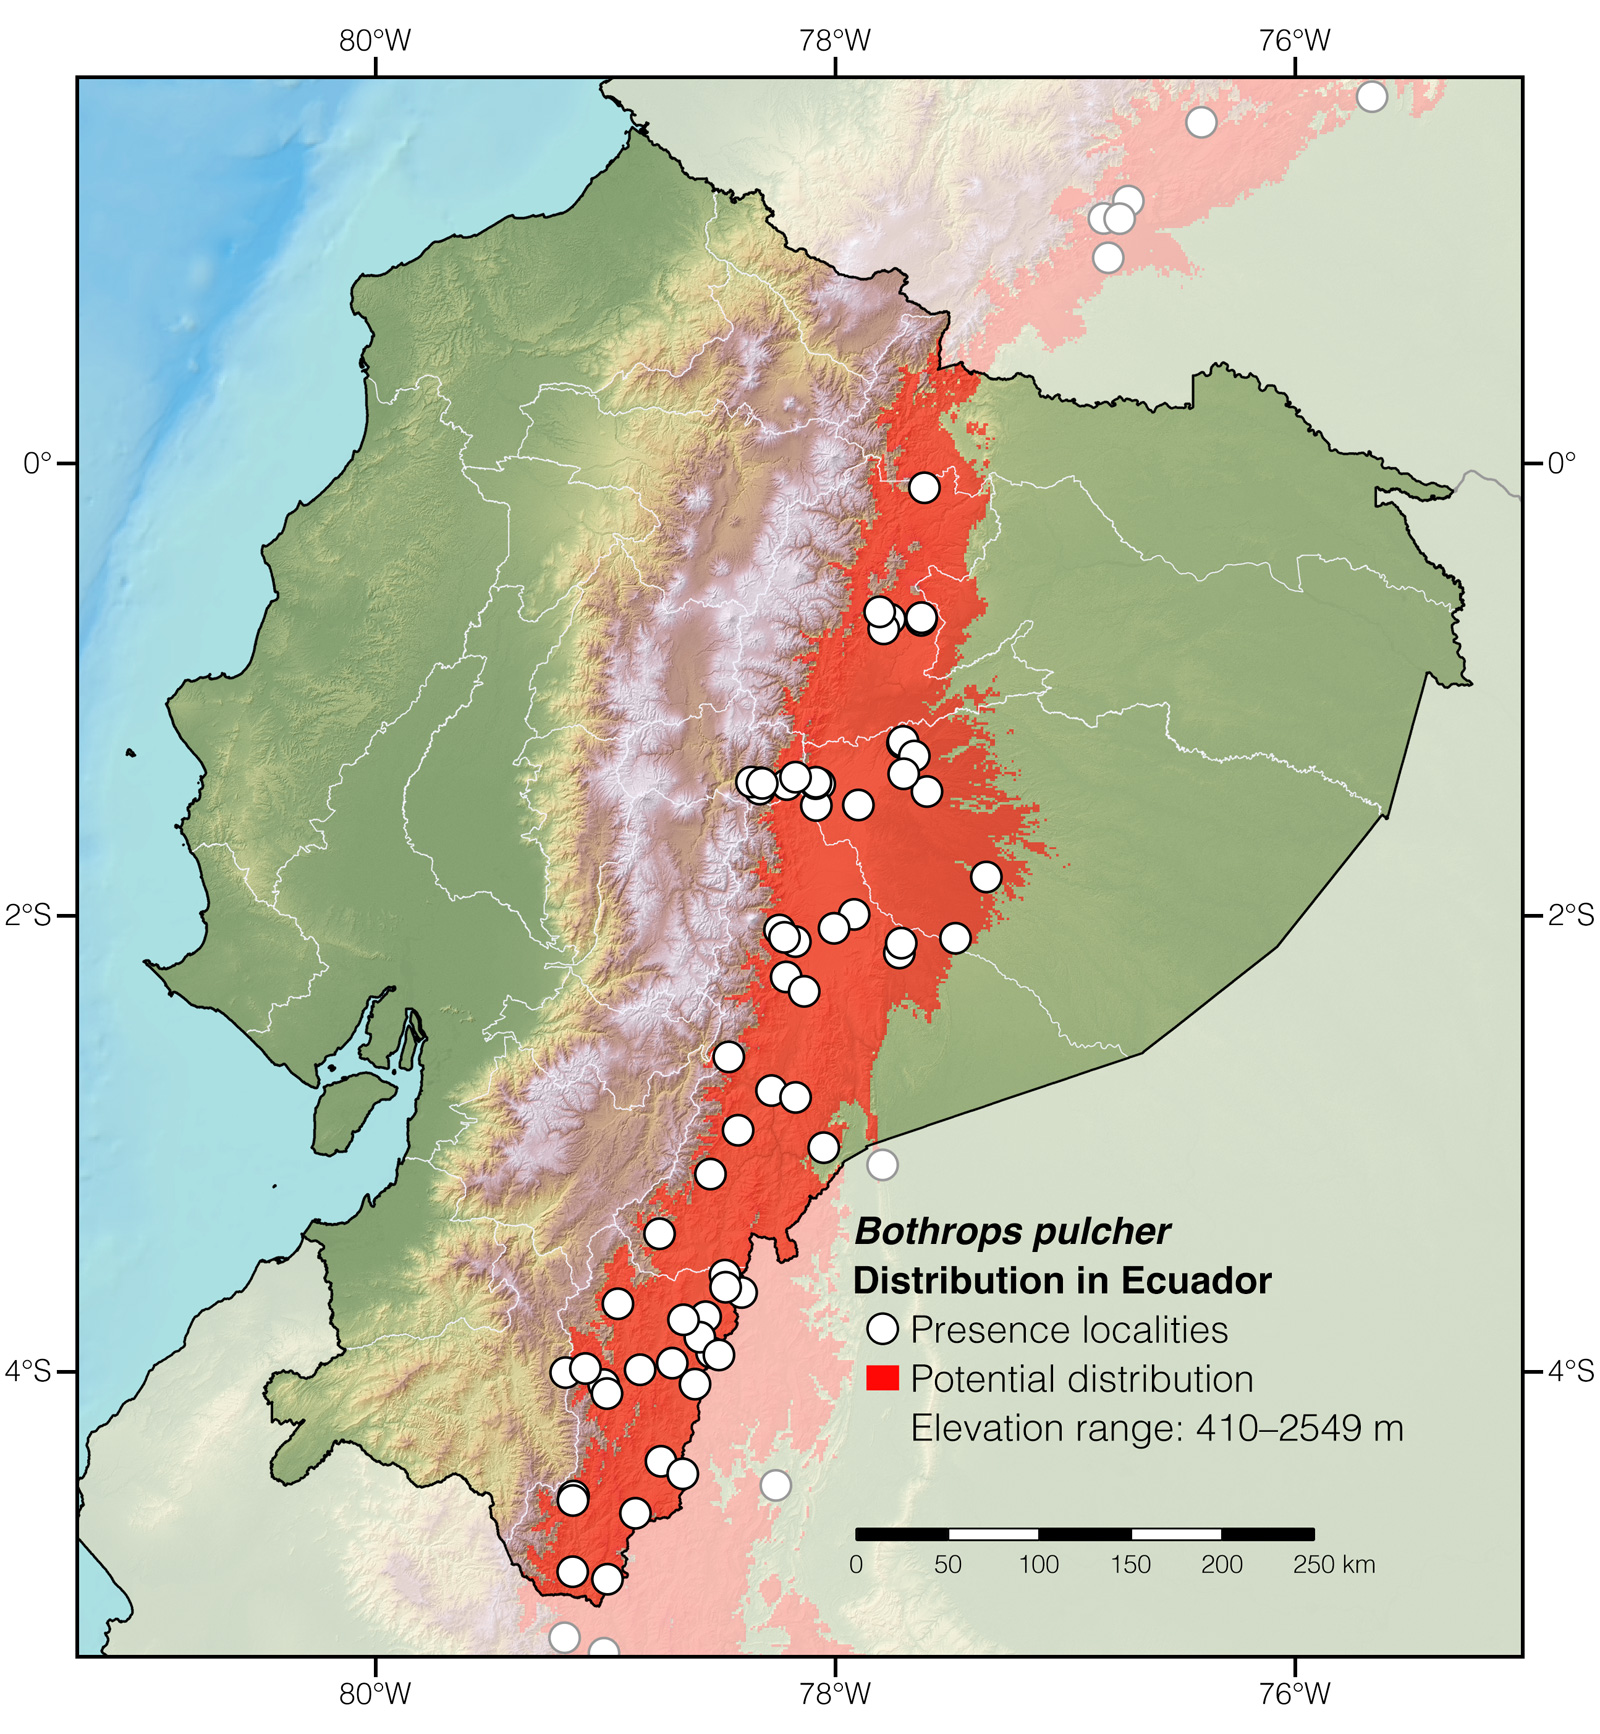 Distribution of Bothrops pulcher in Ecuador